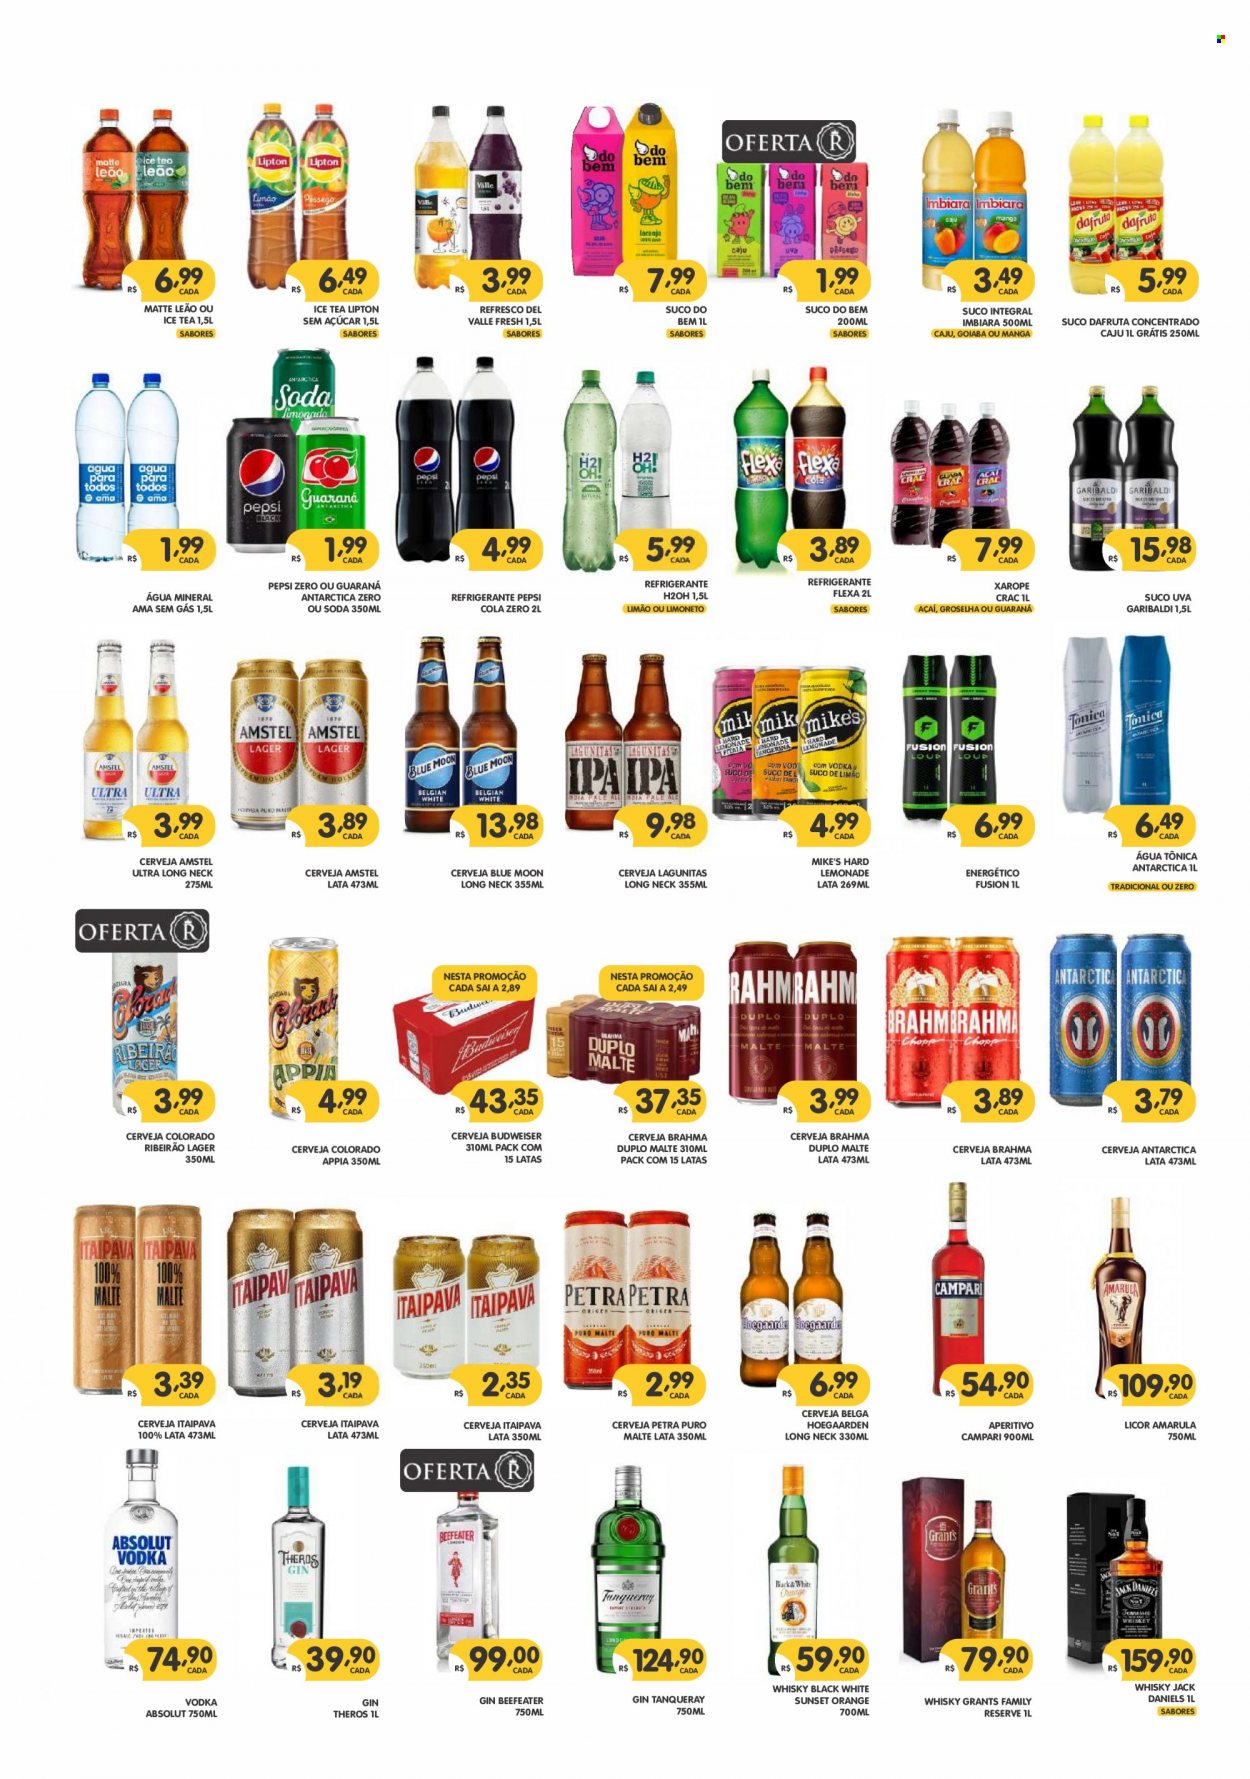 thumbnail - Folheto Supermercados Real - 16/05/2022 - 31/05/2022 - Produtos em promoção - cerveja Colorado, Hoegaarden, Itaipava, Petra, Budweiser, Amstel, Brahma, Antárctica, cerveja, Puro Malte, açai, caju, xarope, suco, Guaraná Antarctica, Pepsi, refrigerante, soda, Lipton, refresco, ice tea, Coca-Cola Zero, Guaraná, suco integral, água mineral, água tónica, Absolut Vodka, Beefeater, gin, Grant‘s, Jack Daniel's, vodka, whiskey, liqueur, aperitivo, Tanqueray. Página 7.